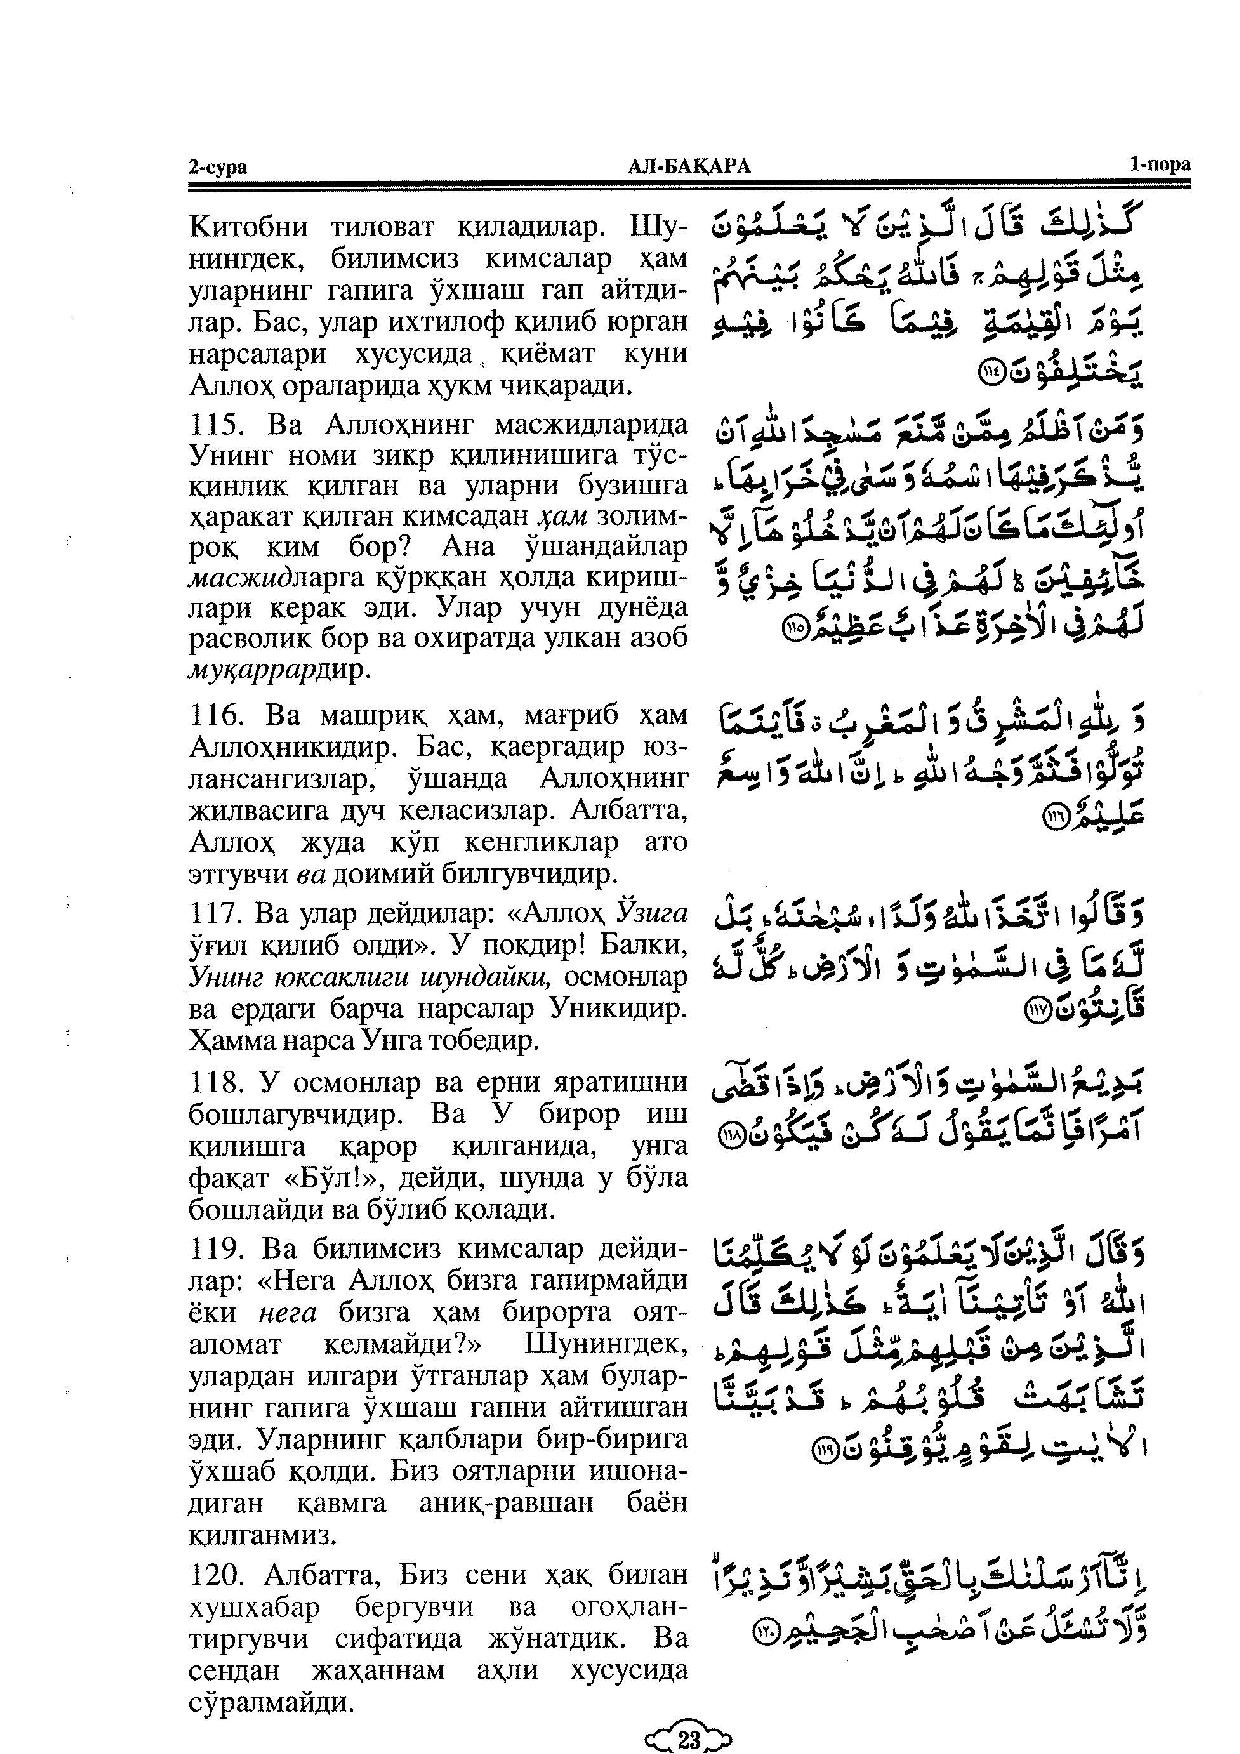 002-al-baqarah-page-021